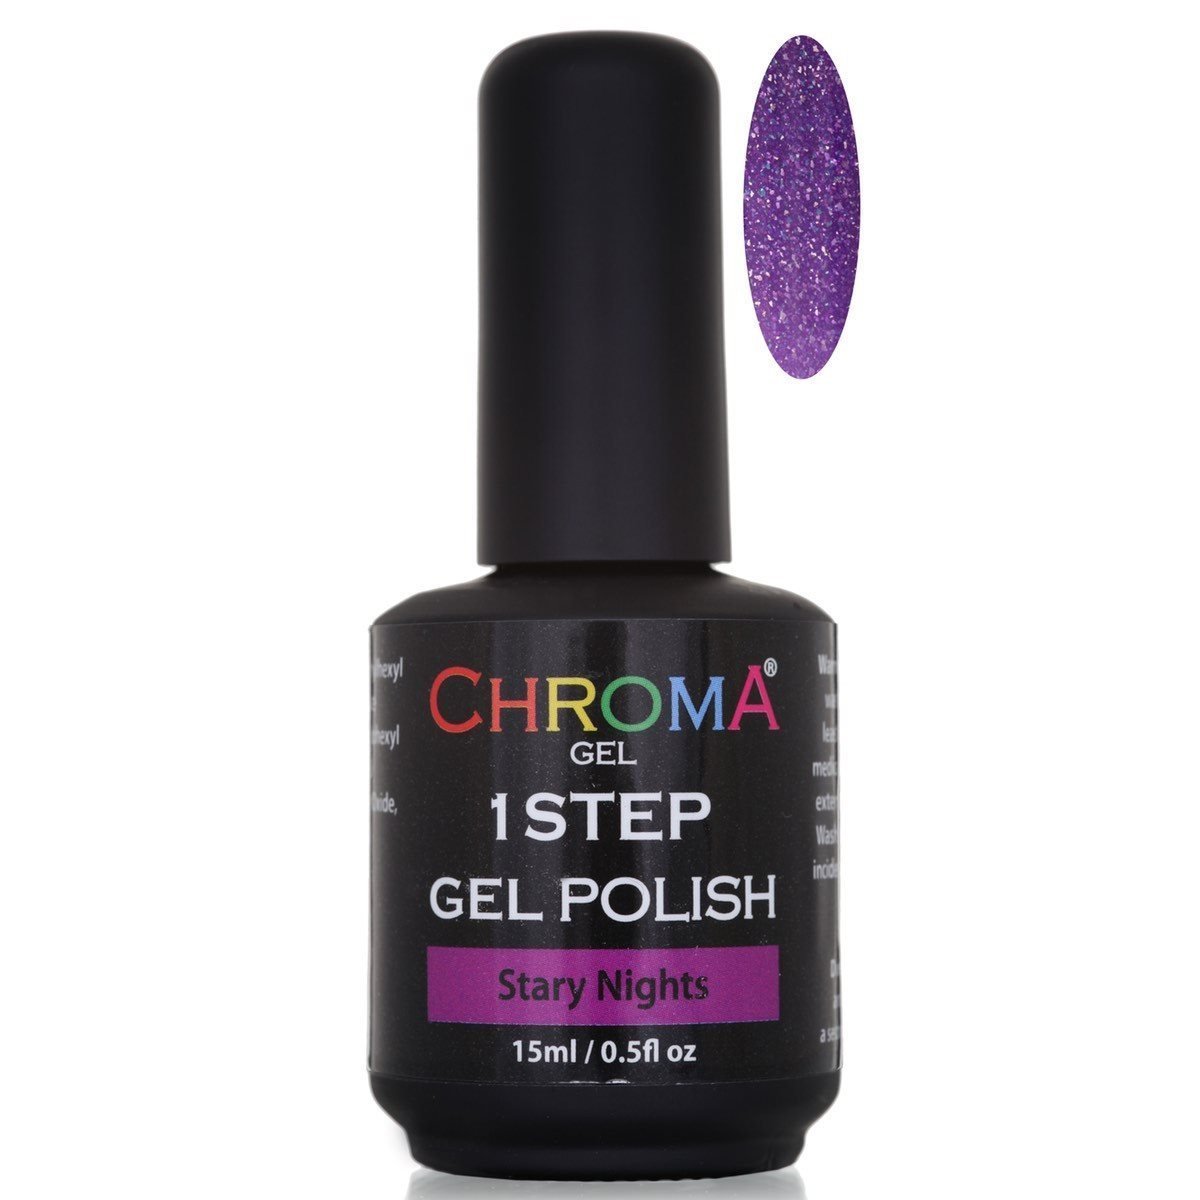 Chroma Gel 1 Step Gel Polish Stary Nights No.40 - Purple Gel Polish with Silver Glitter - beautyhair.co.ukChroma Gel